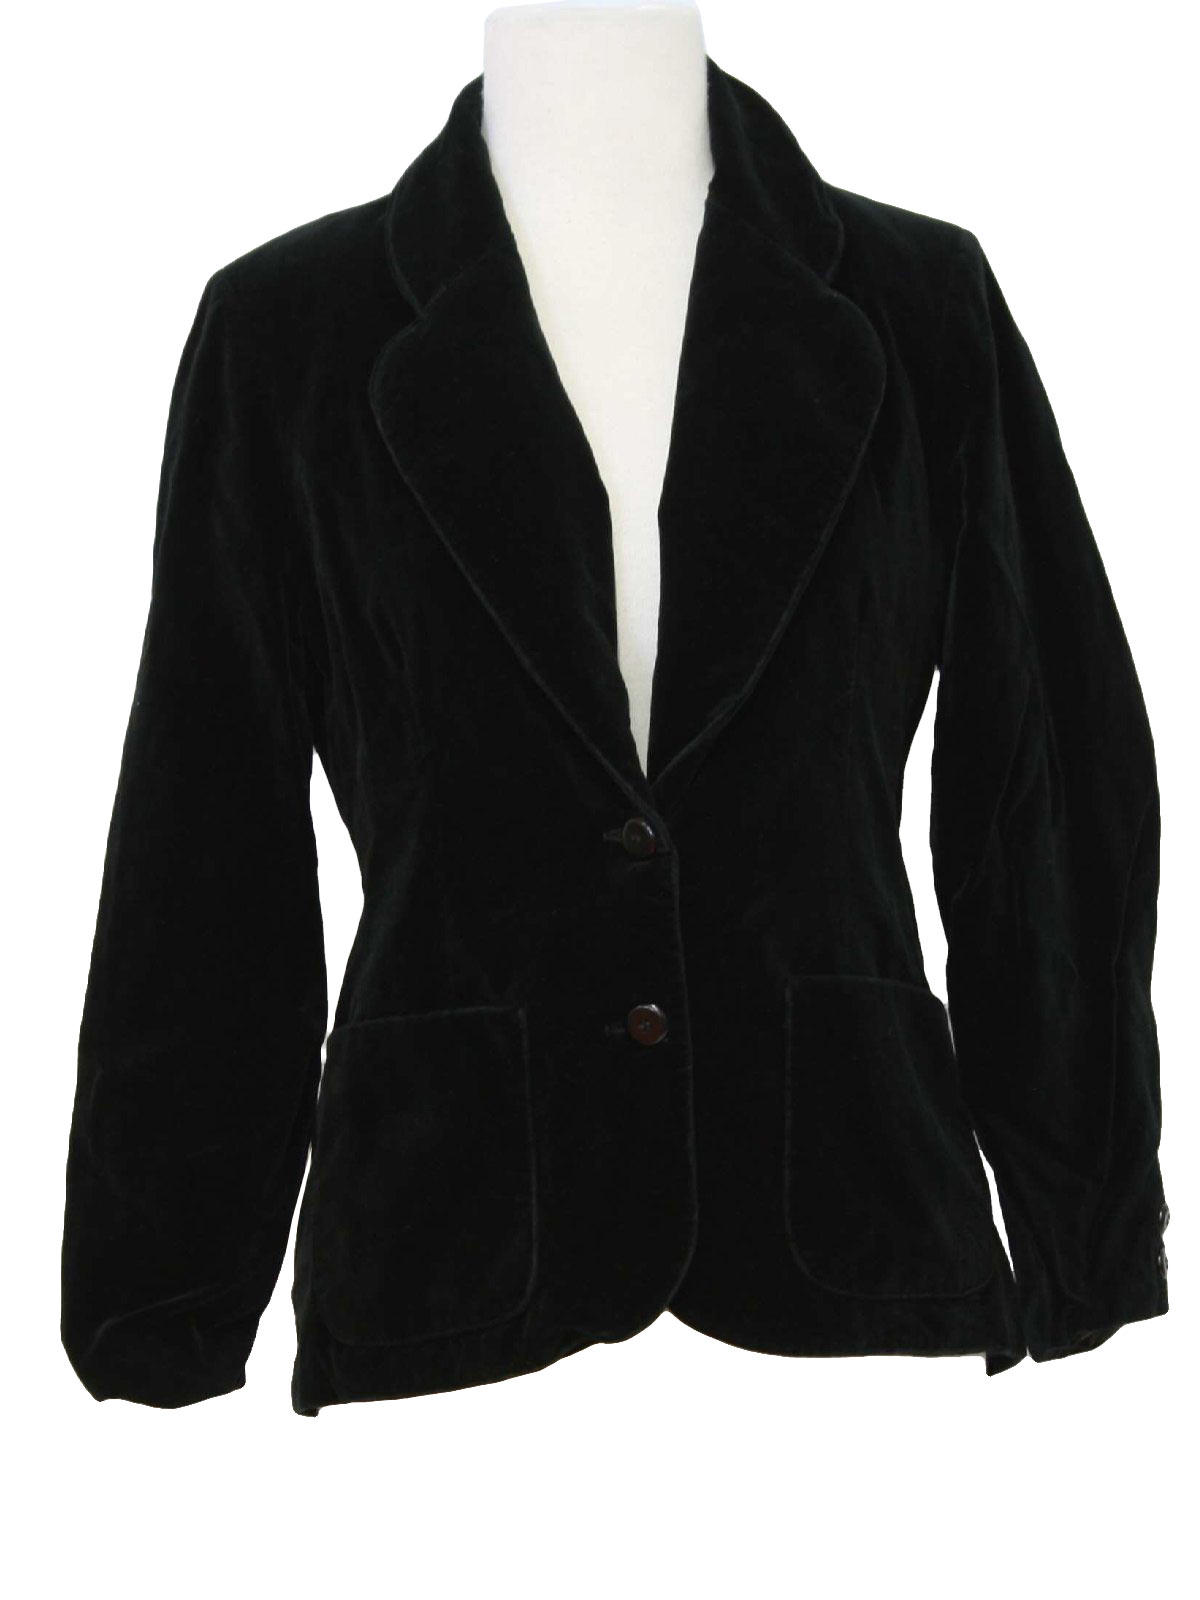 Collection Womens Black Blazer Jacket Pictures - Reikian